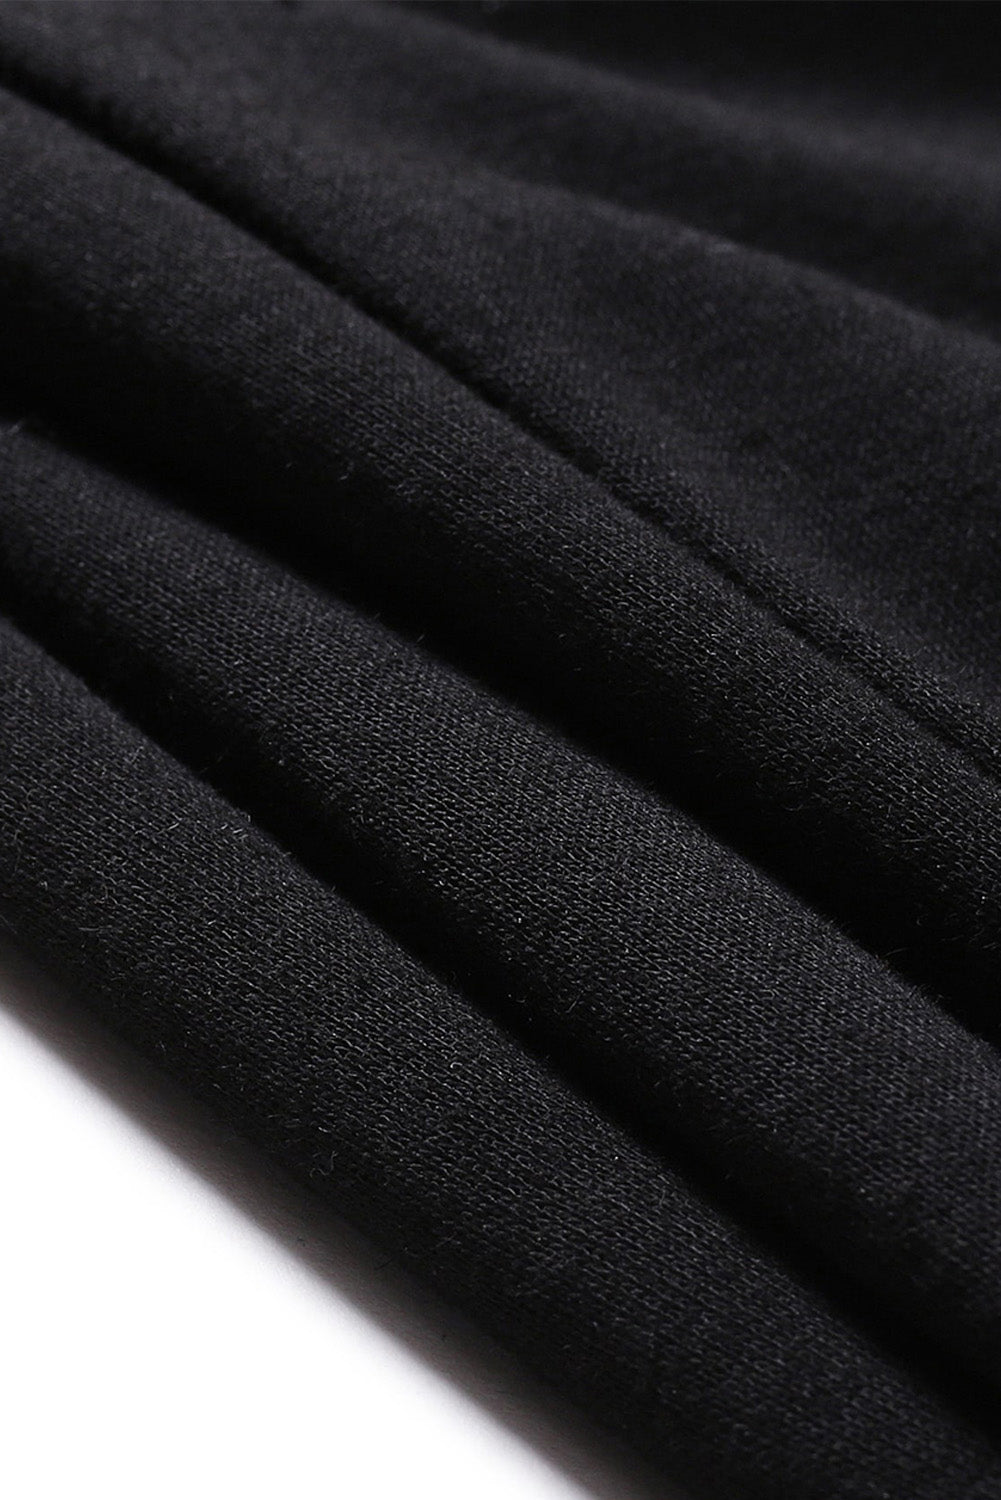 Black COWBOY Steer Head Print Drawstring High Waist Men's Sweatpants Men's Pants JT's Designer Fashion